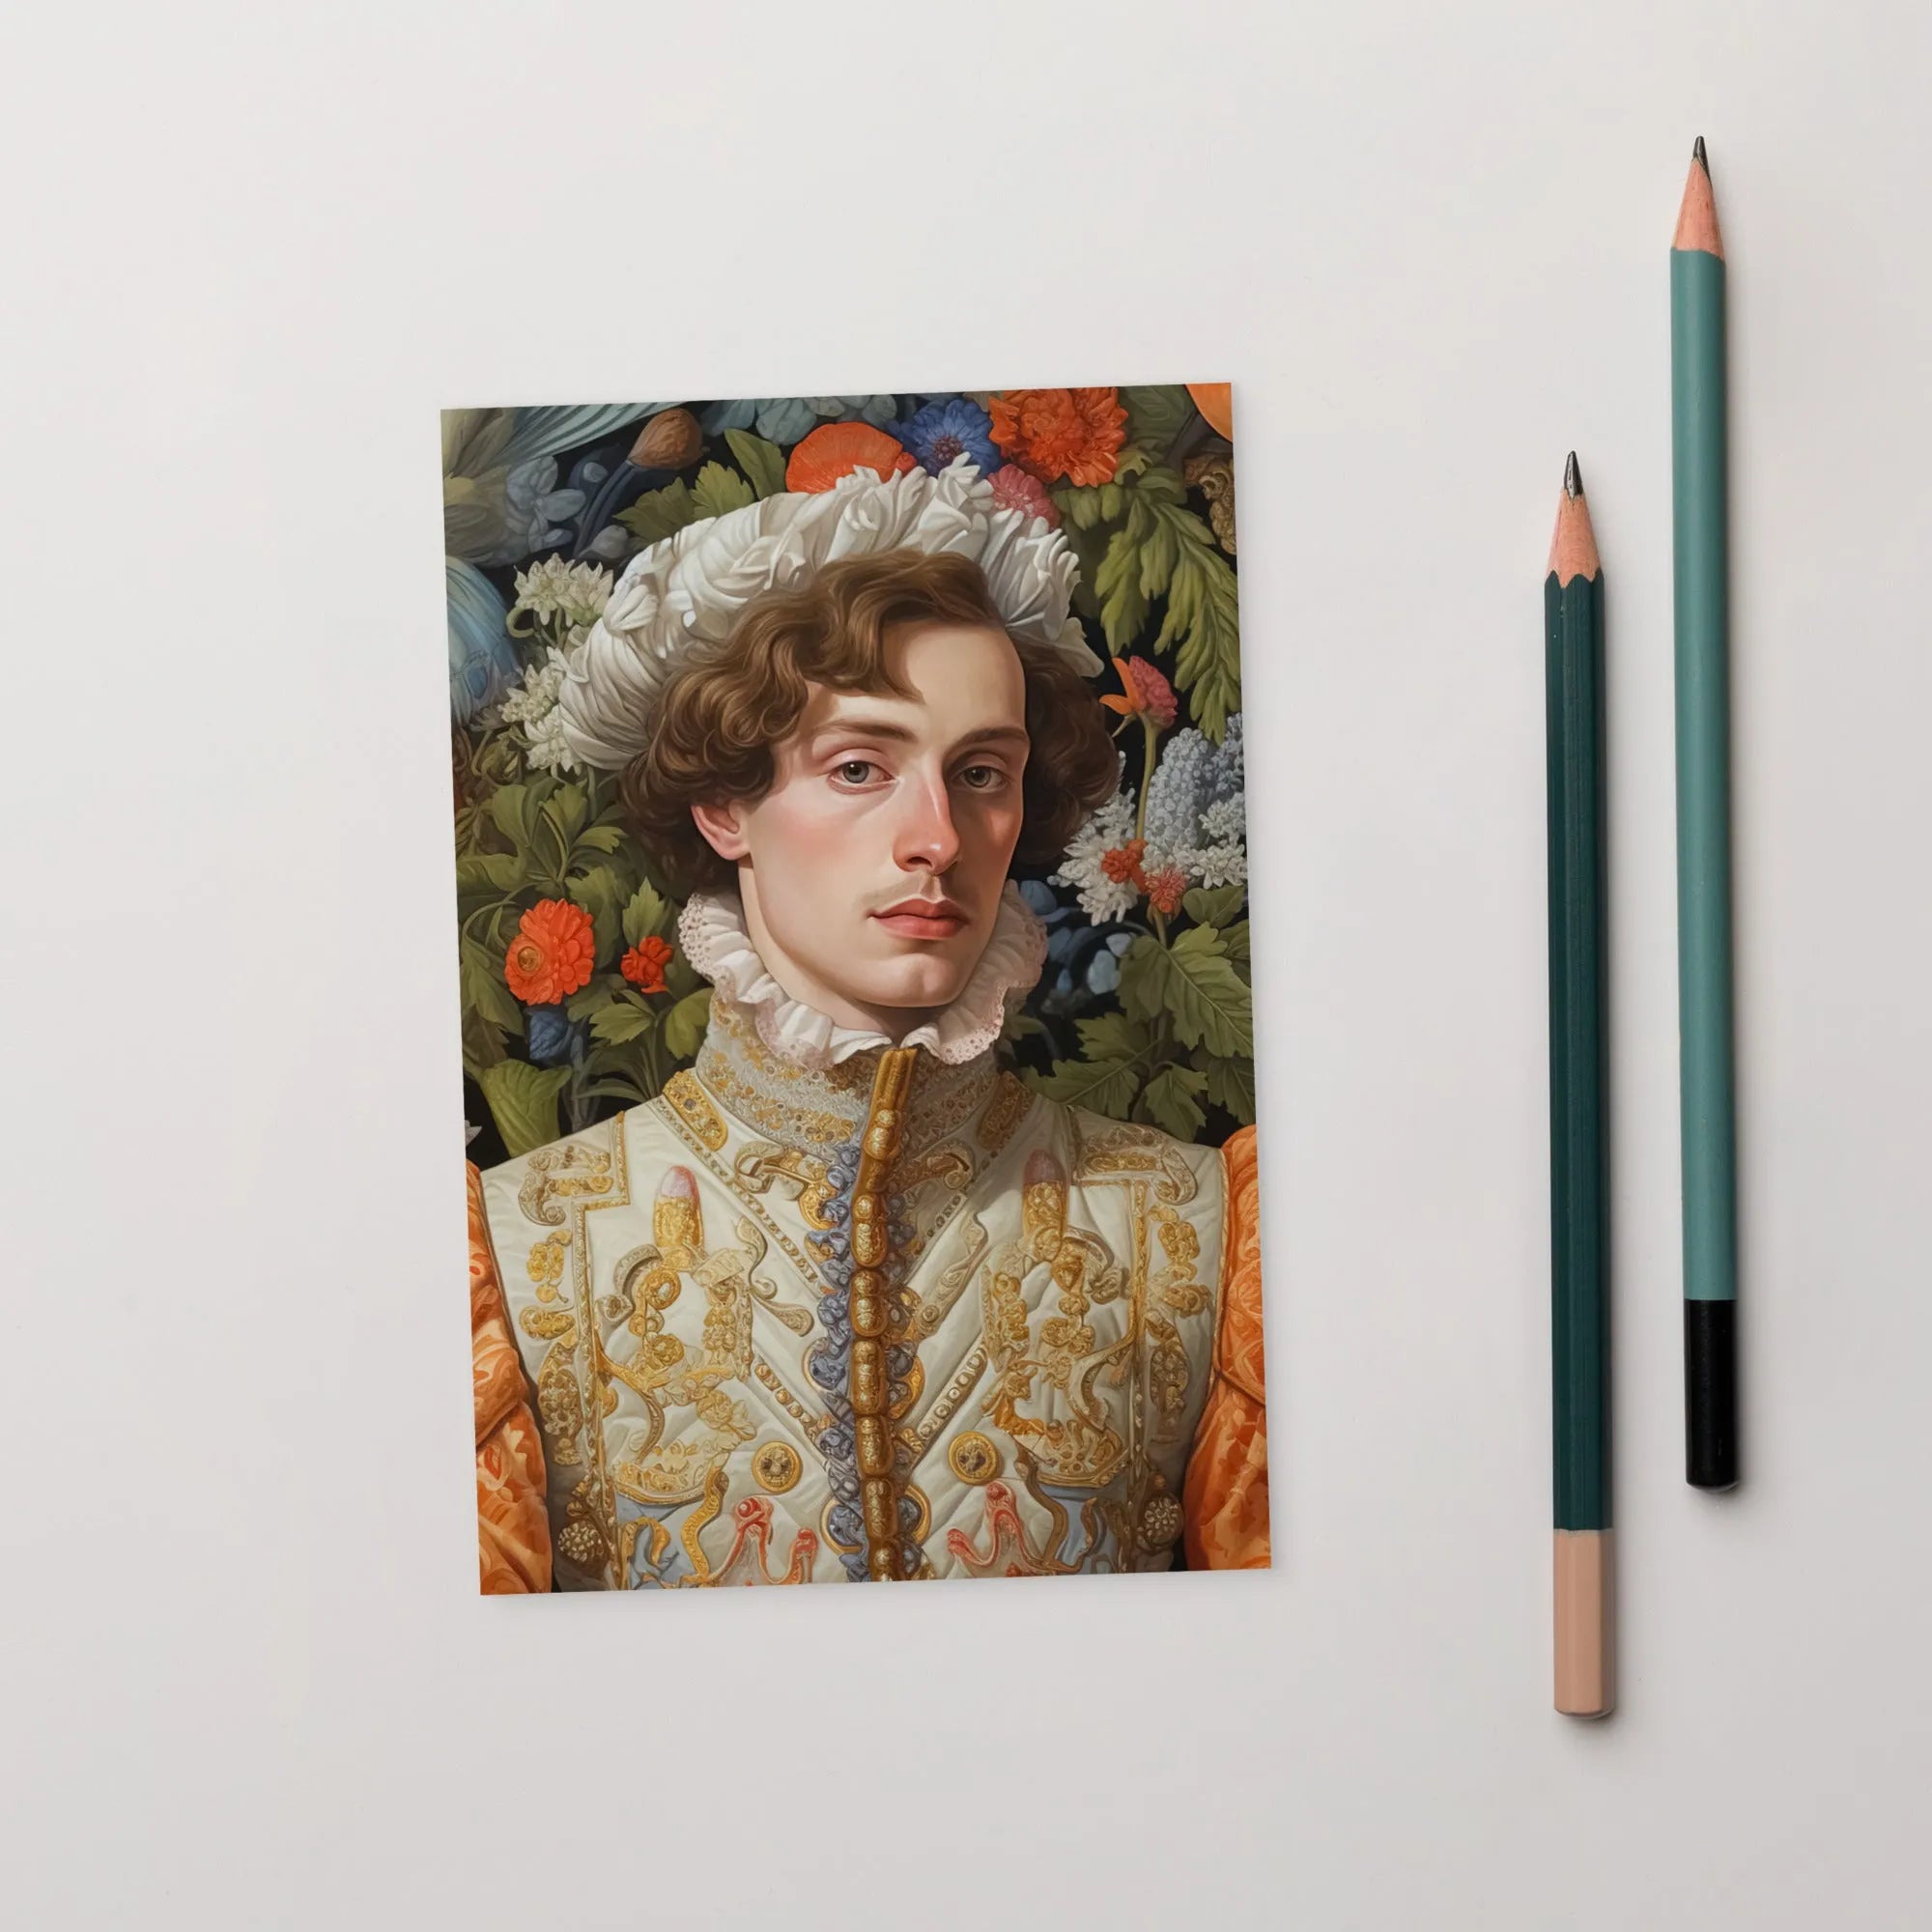 Prince Hugo - Gay German Royalty Renaissance Queerart Print - 4’x6’ - Posters Prints & Visual Artwork - Aesthetic Art